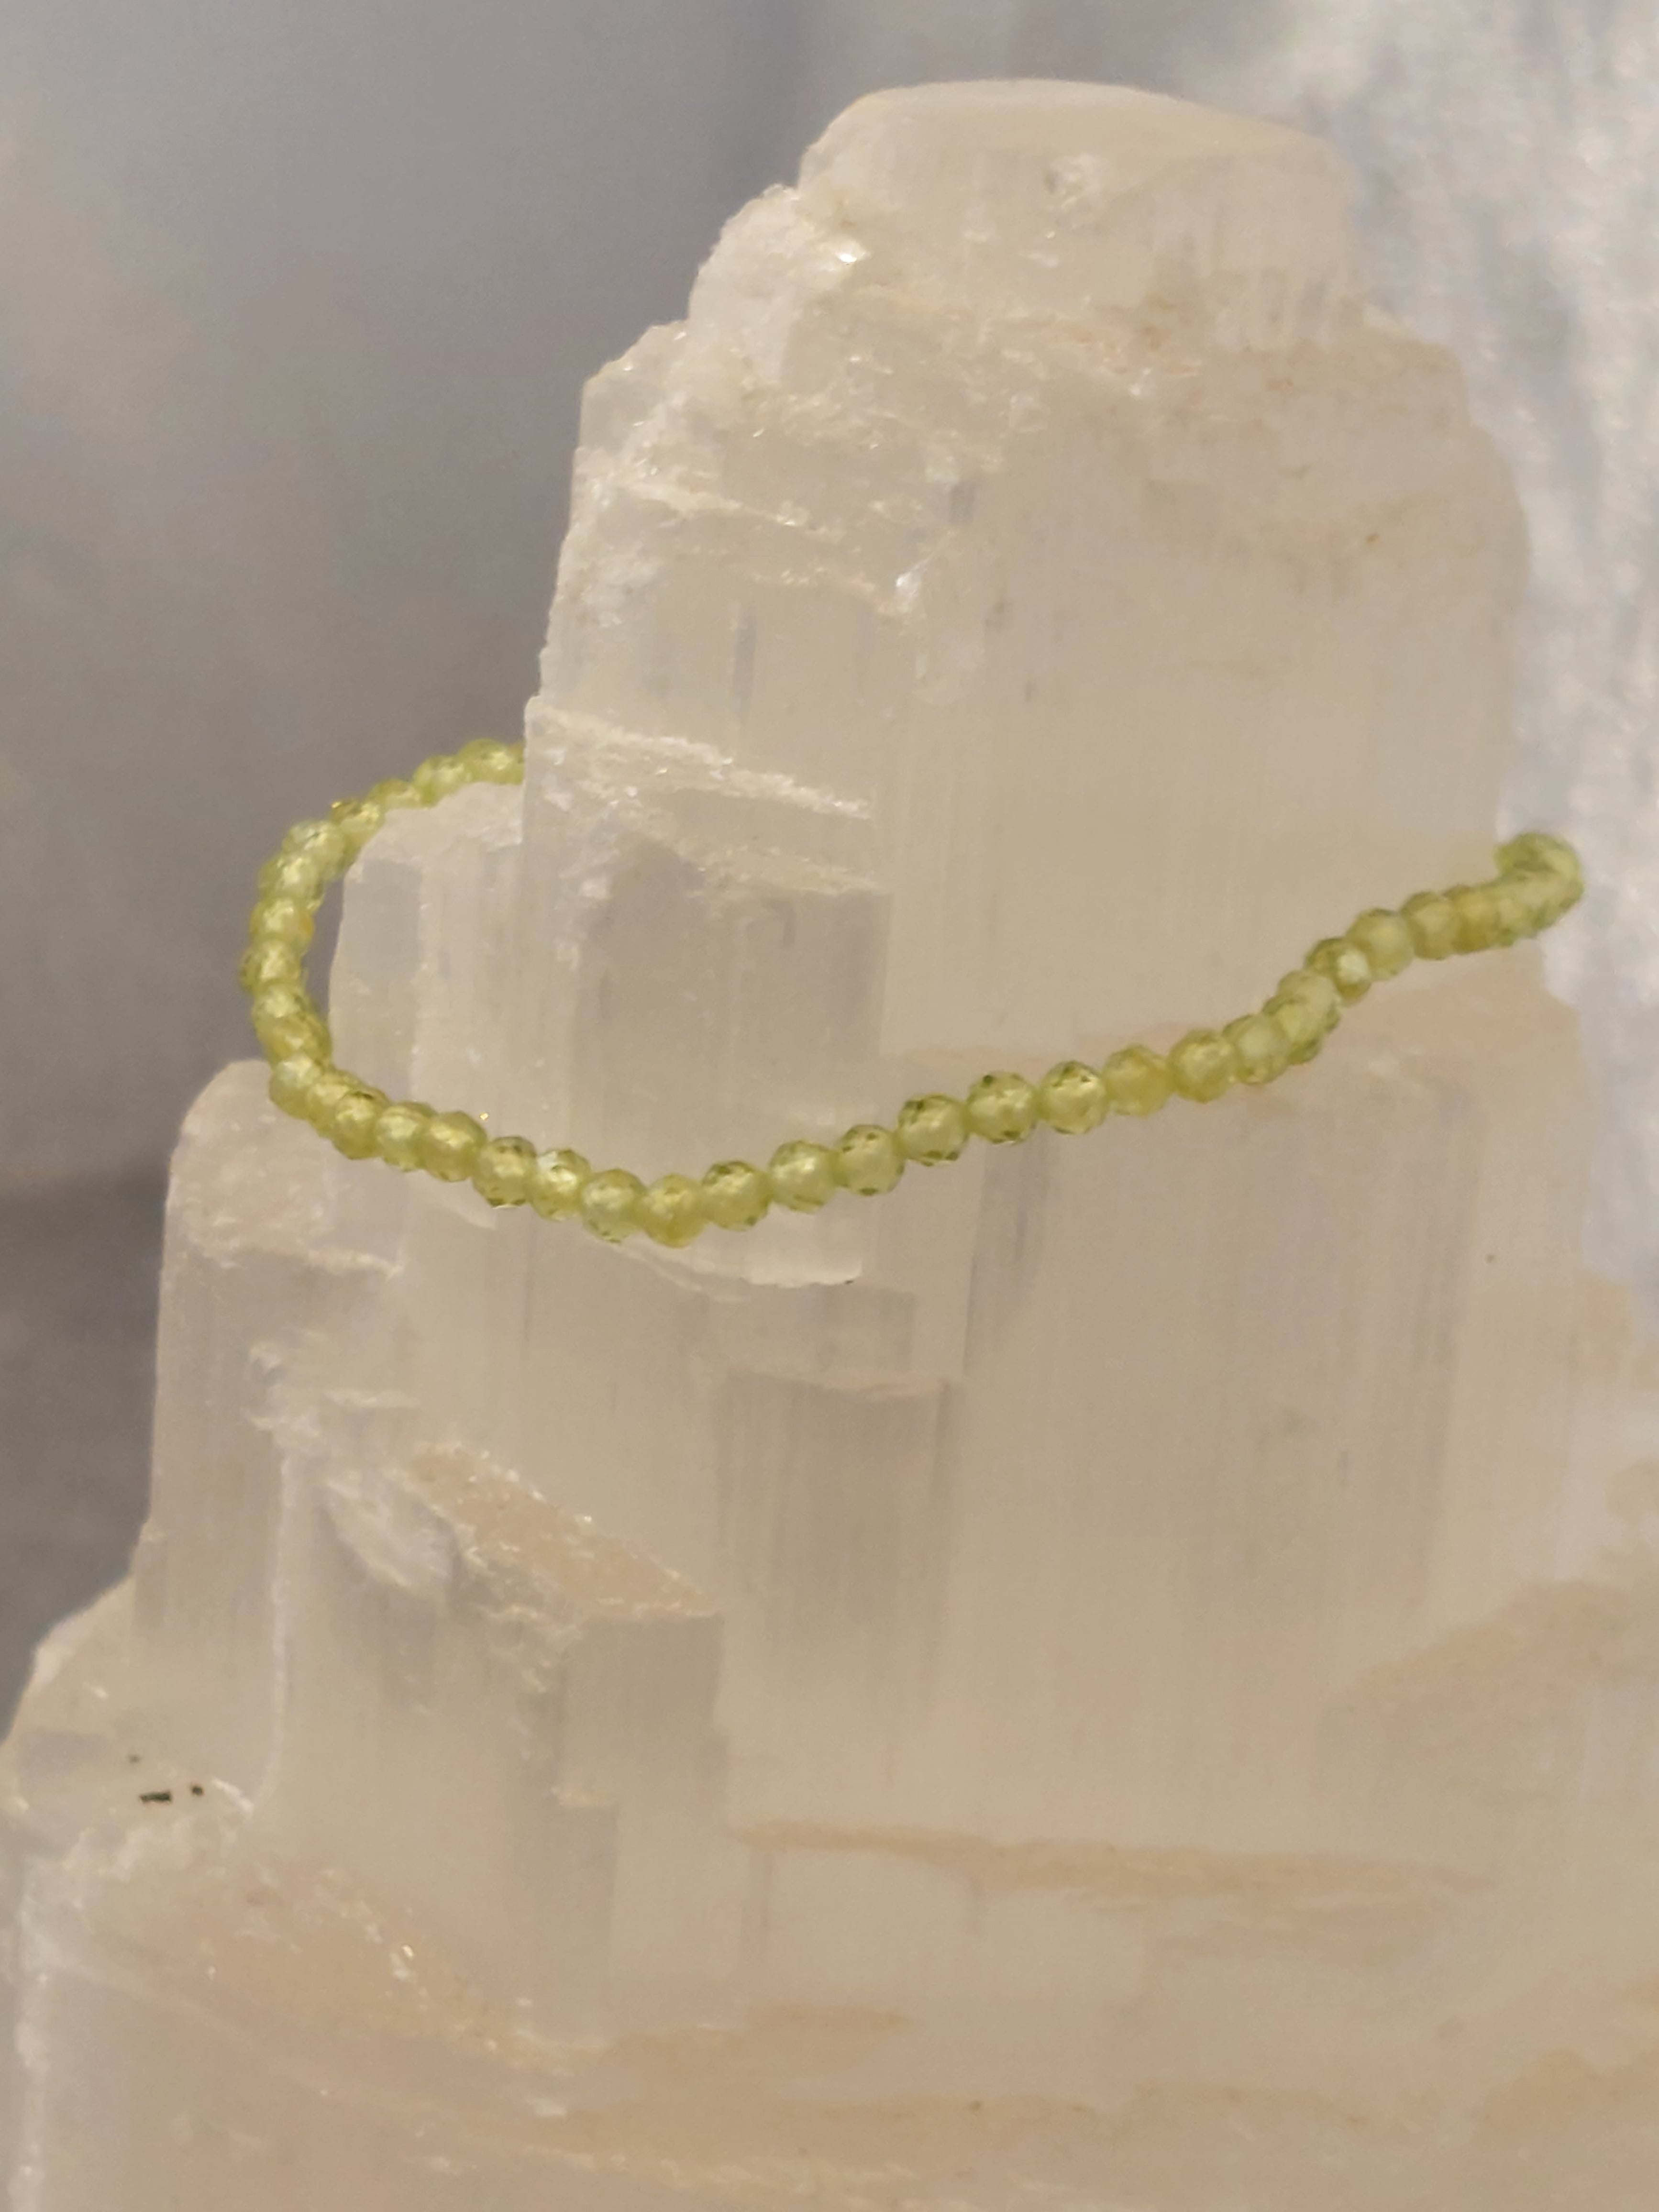 Peridot Faceted Bead Bracelet - 3mm Bead